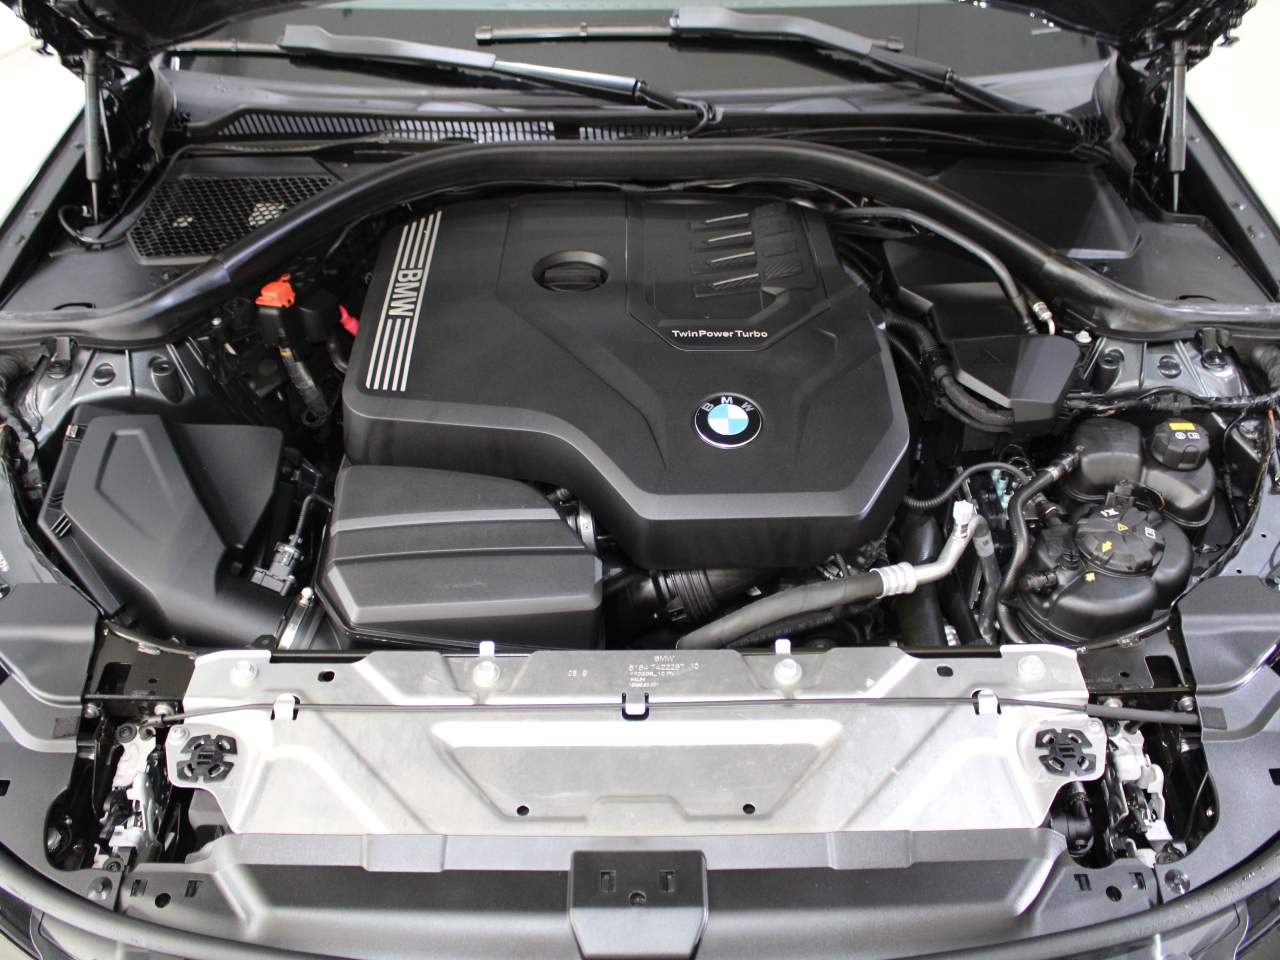 2019 BMW 3-Series 330i